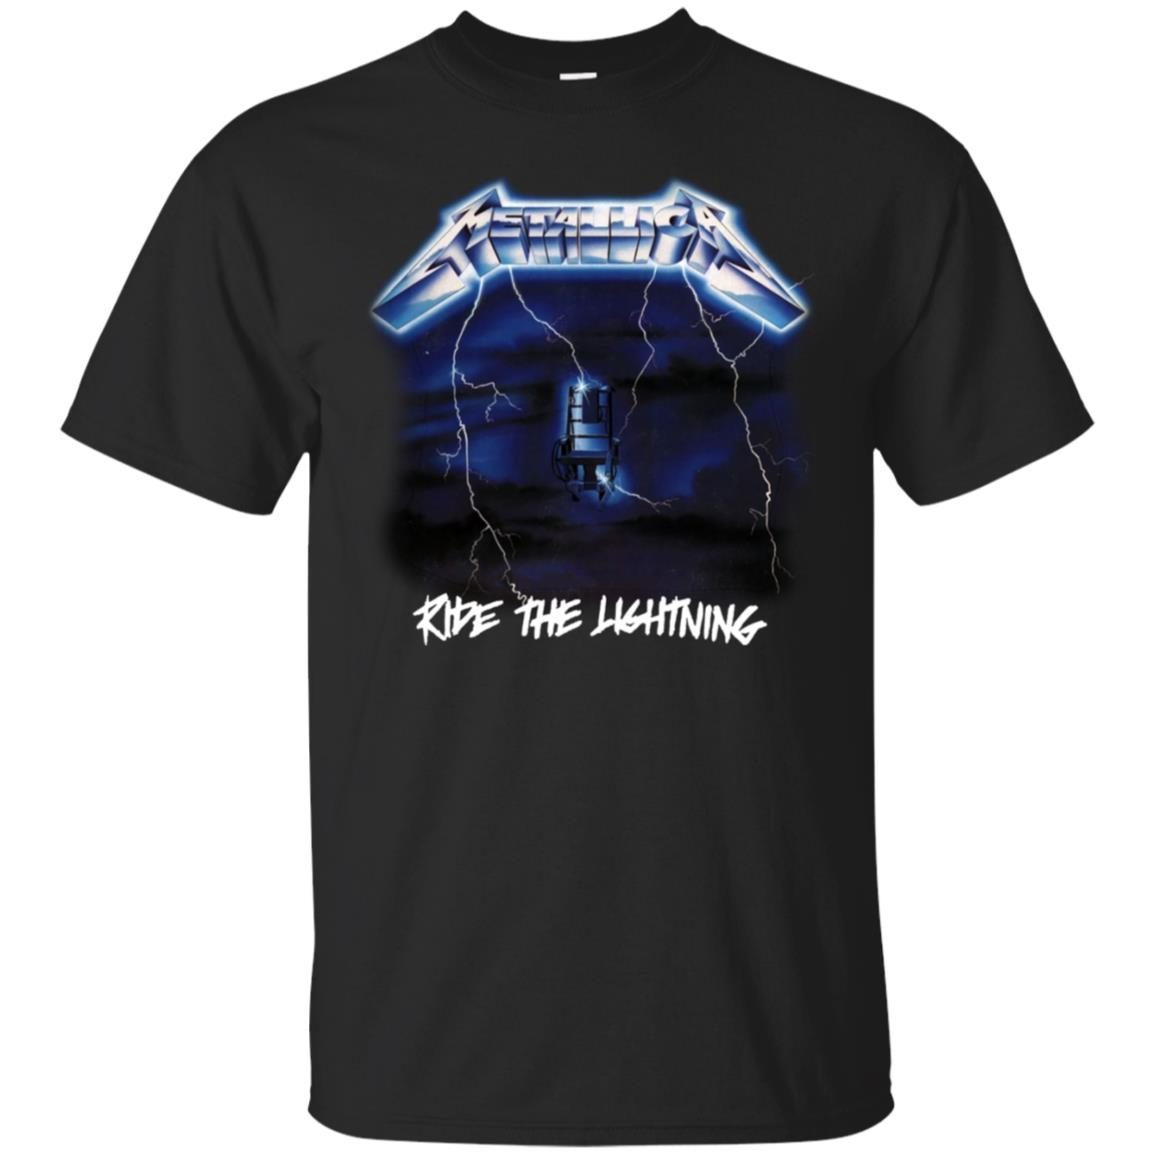 ride the lightning tour t shirt